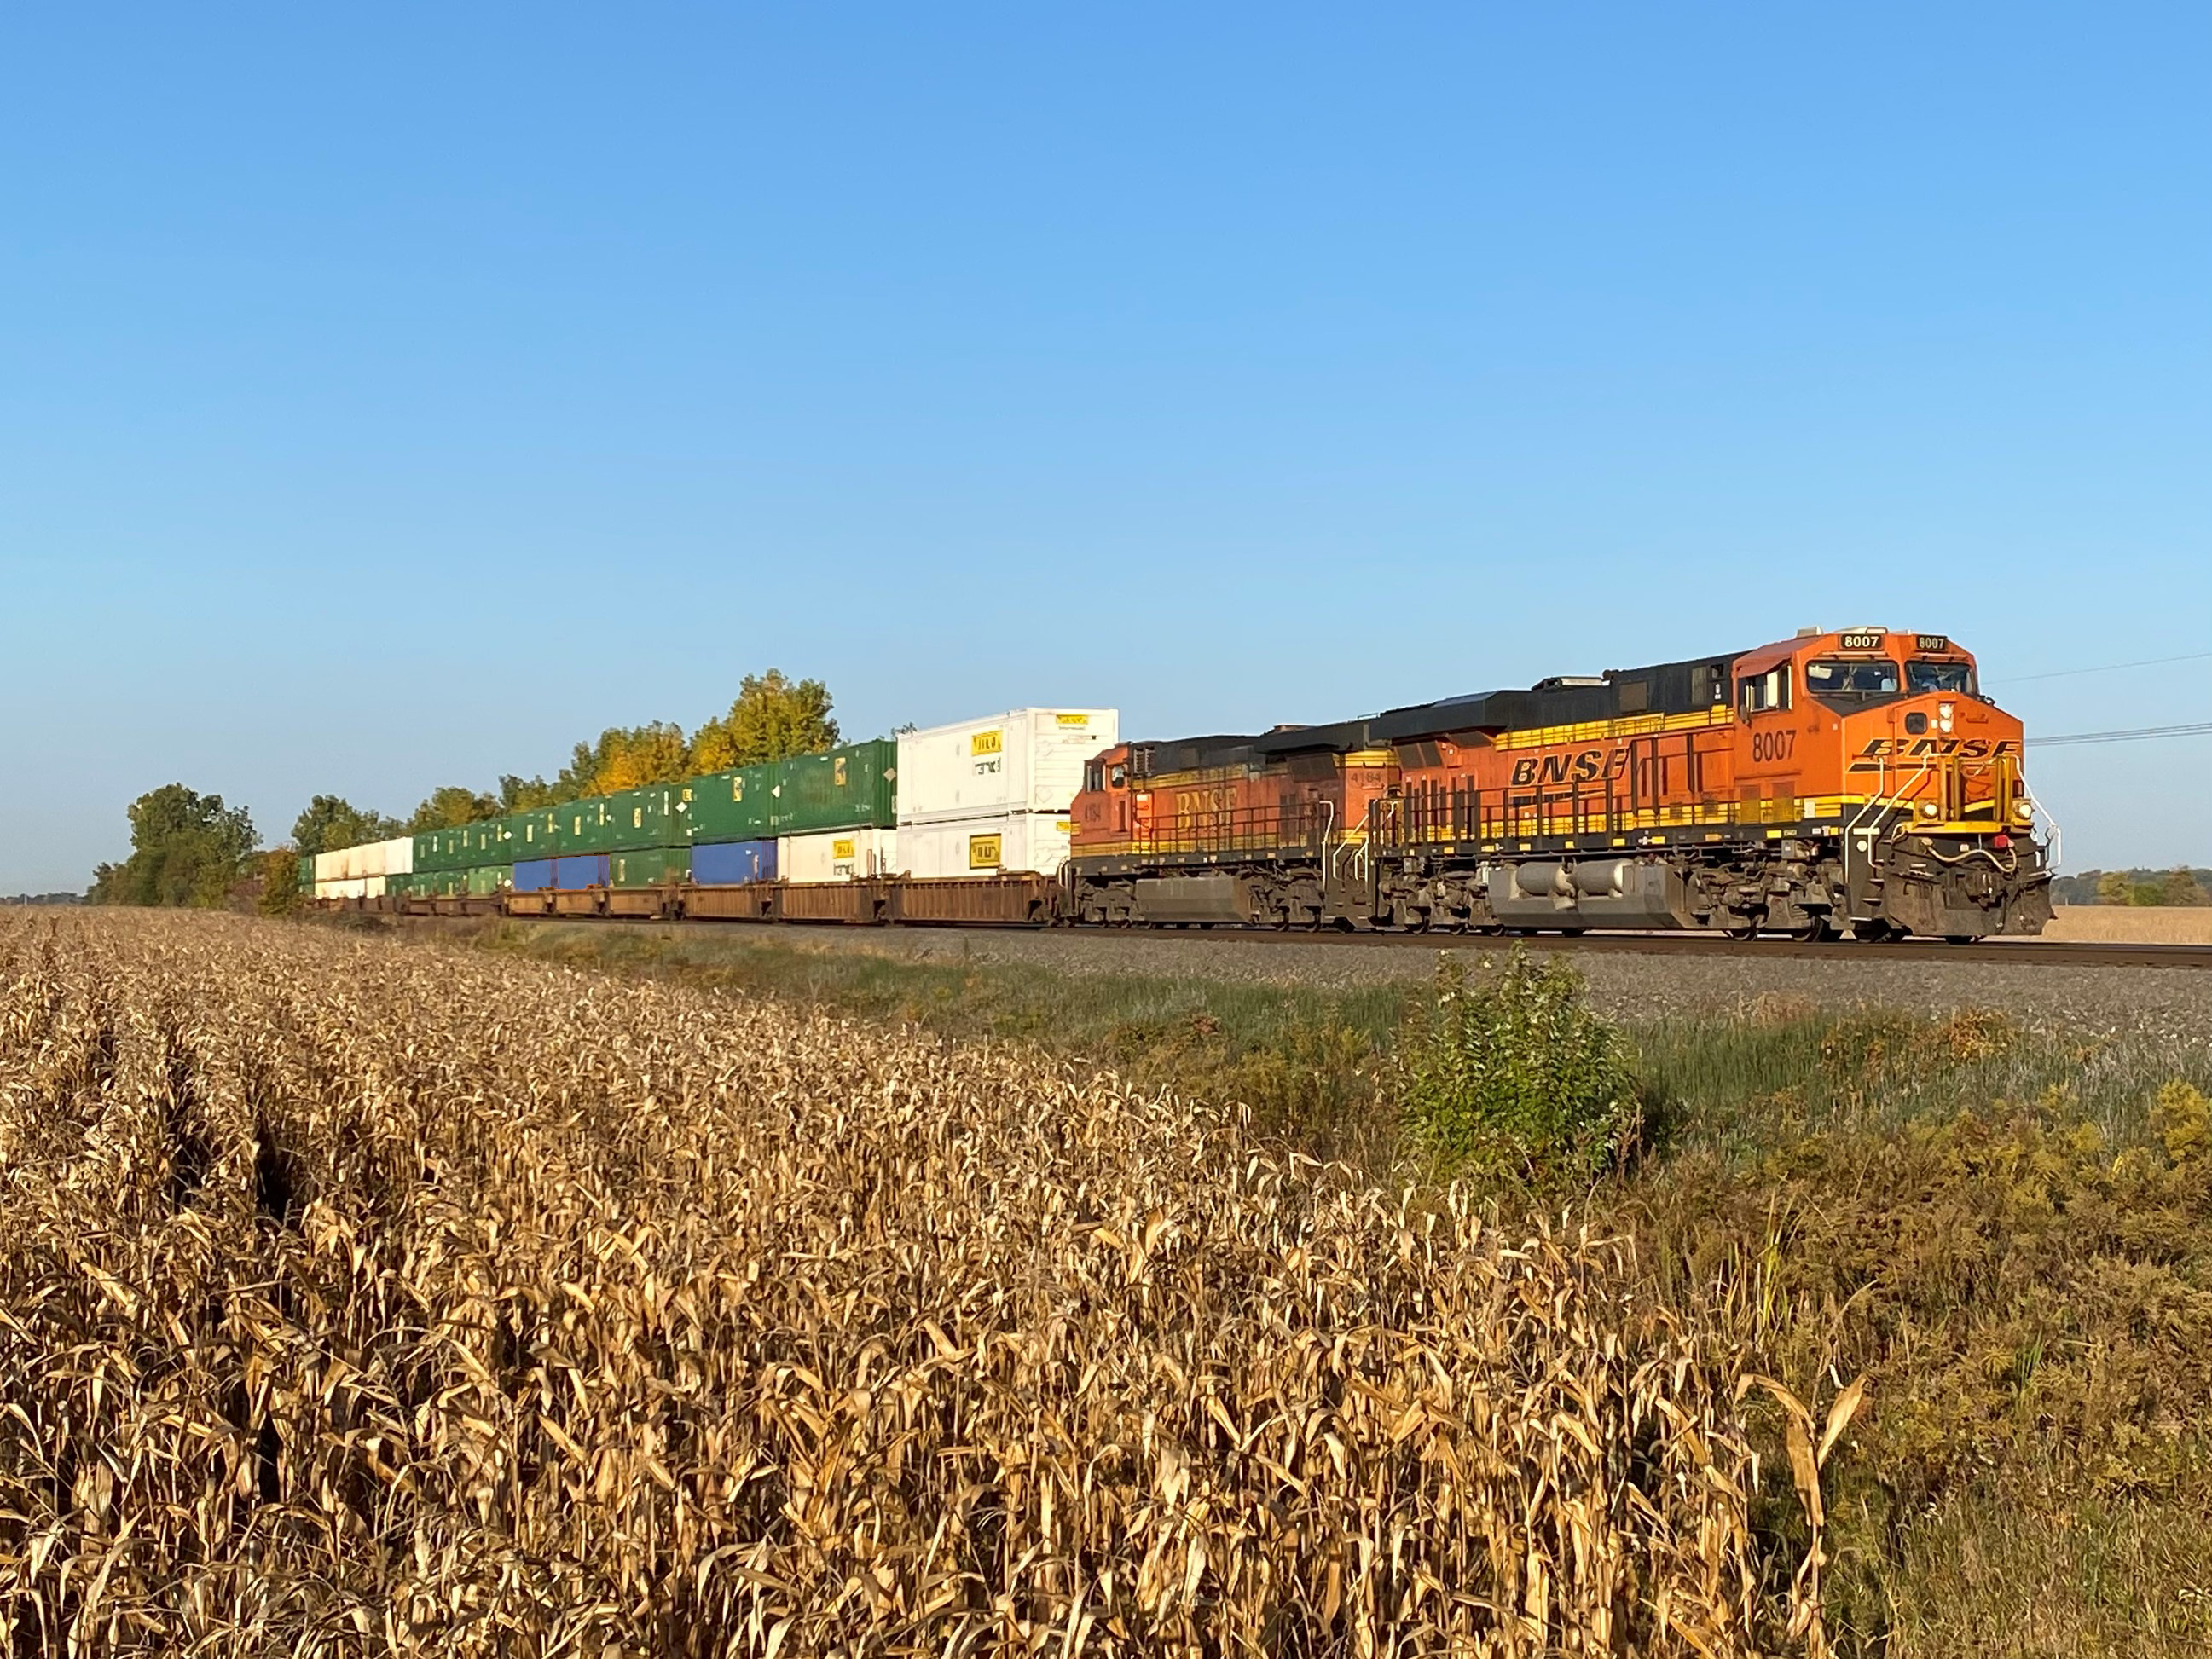 An intermodal train with BNSF locomotives in the lead. Photo taken near Bryan, Ohio, by Chris Wehman.